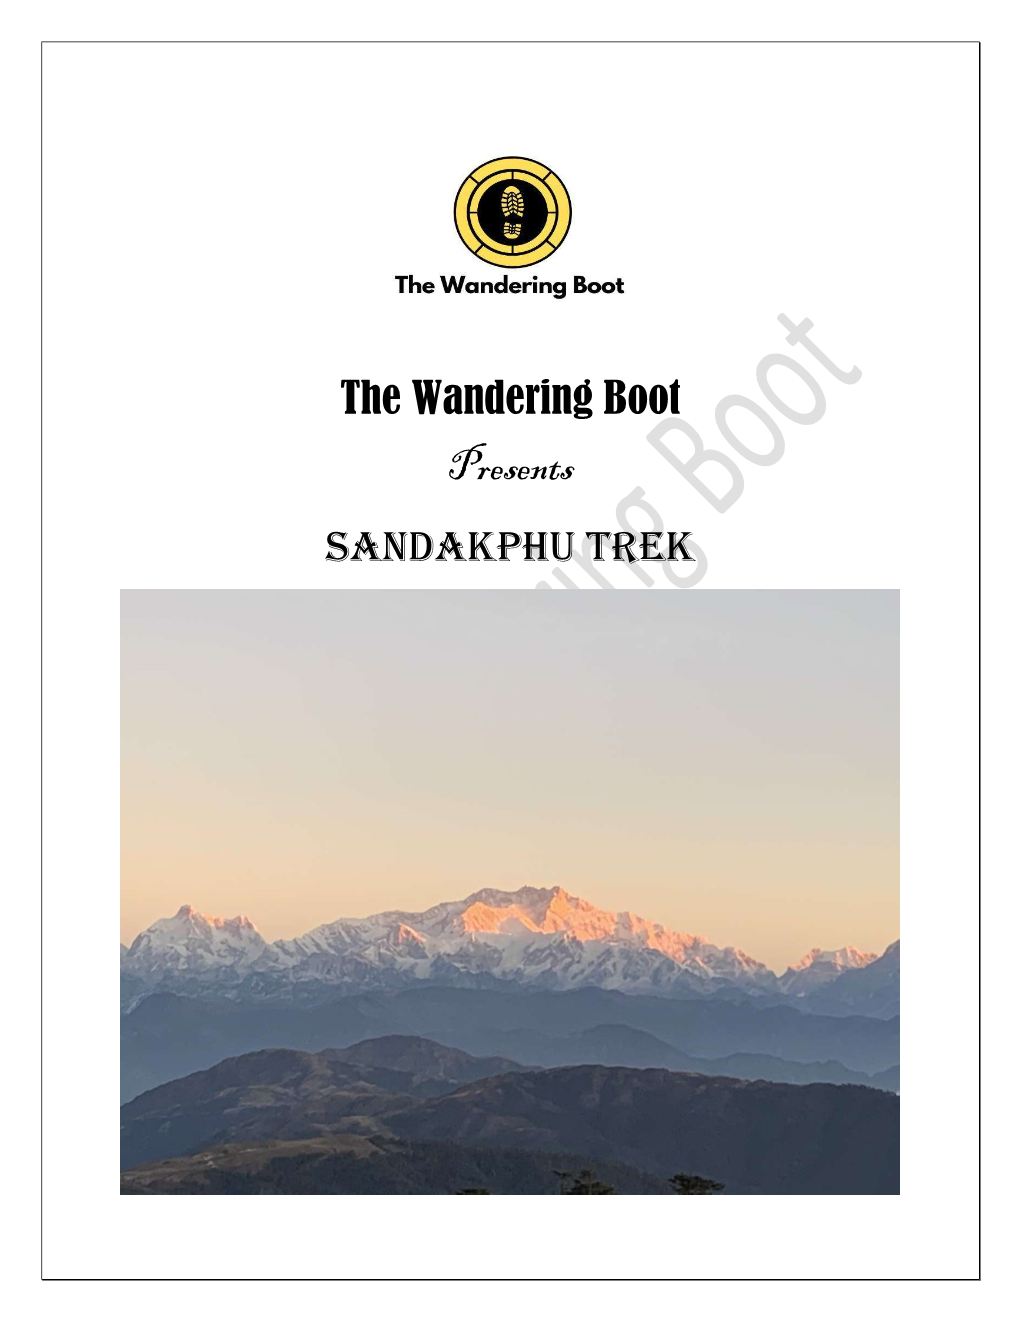 The Wandering Boot Presents SANDAKPHU TREK